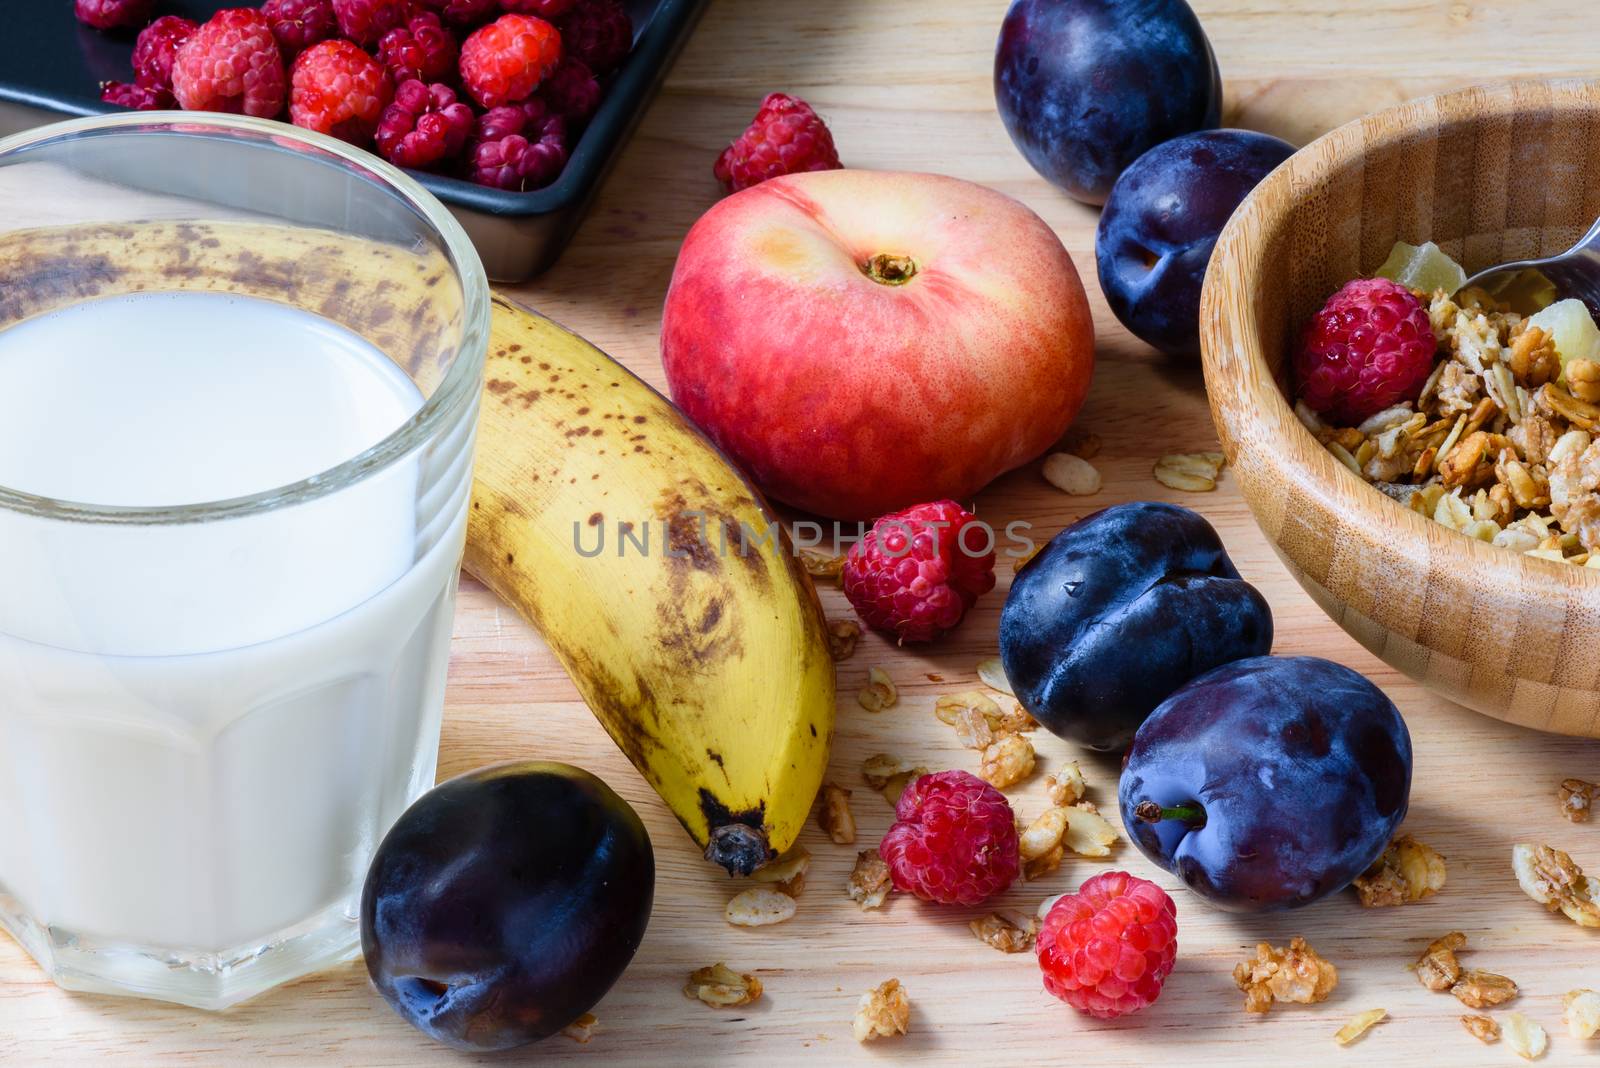 Super breakfast with muesli, berries, fruits and milk by Seva_blsv